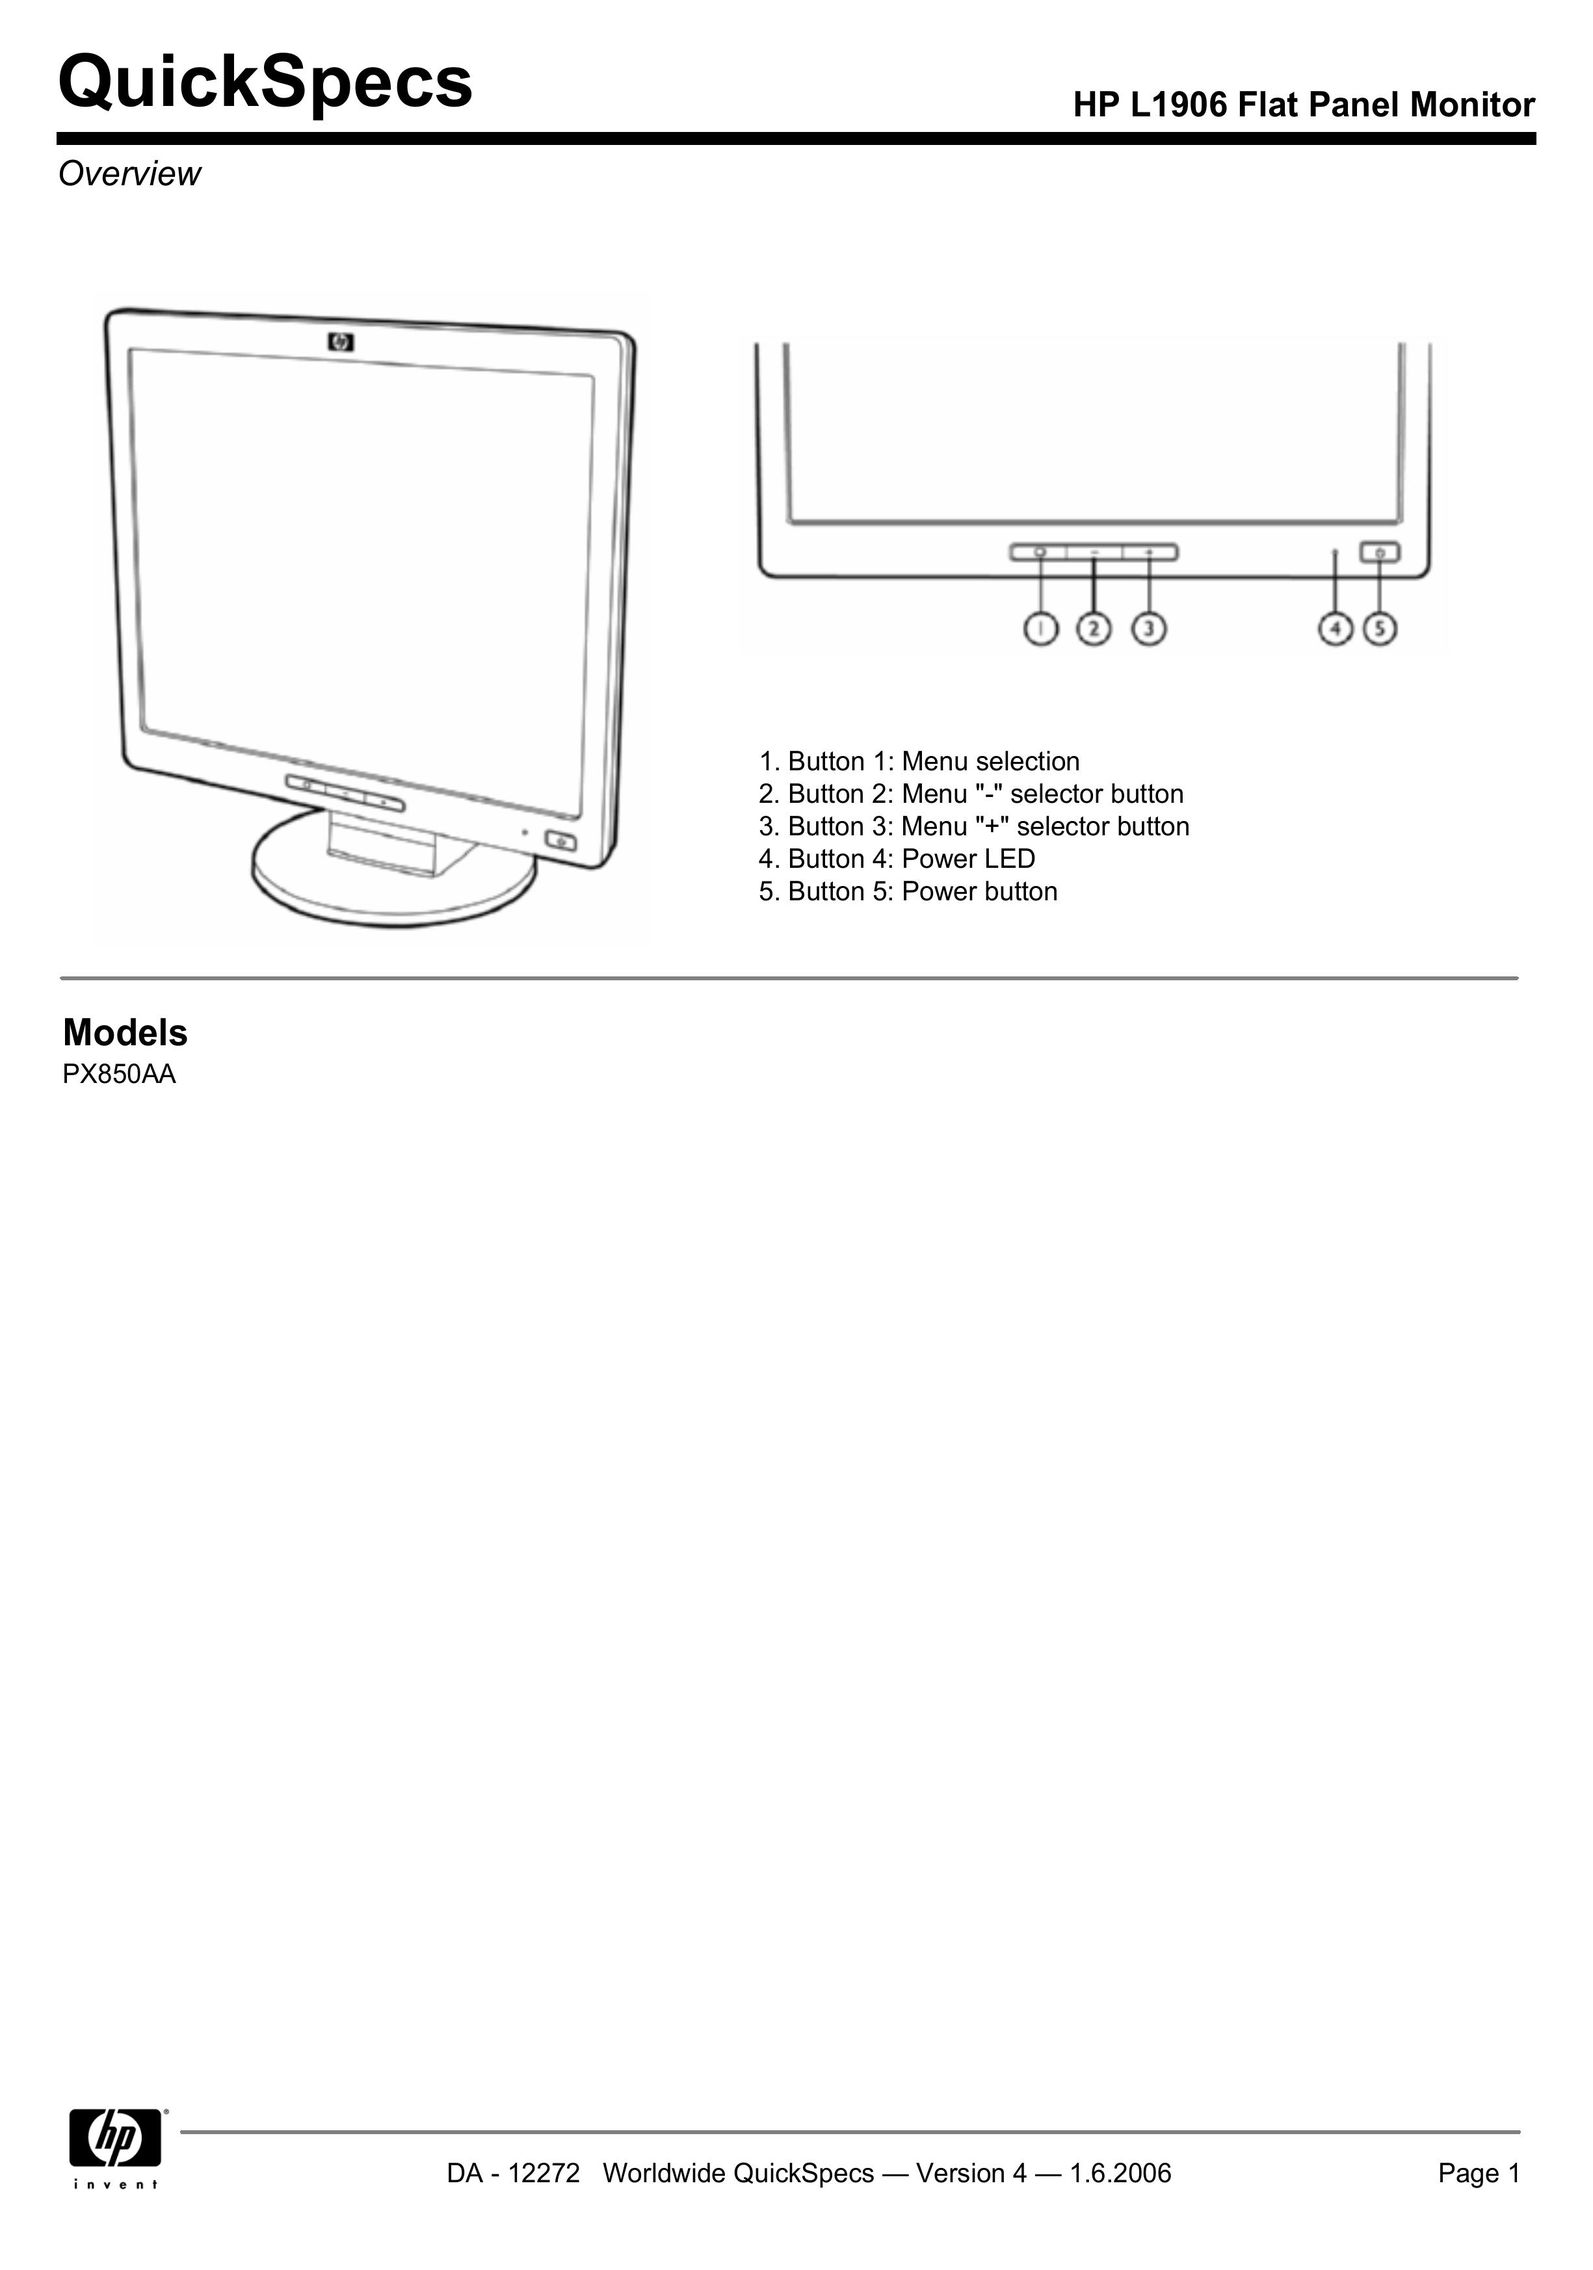 Compaq PX850AA Flat Panel Television User Manual